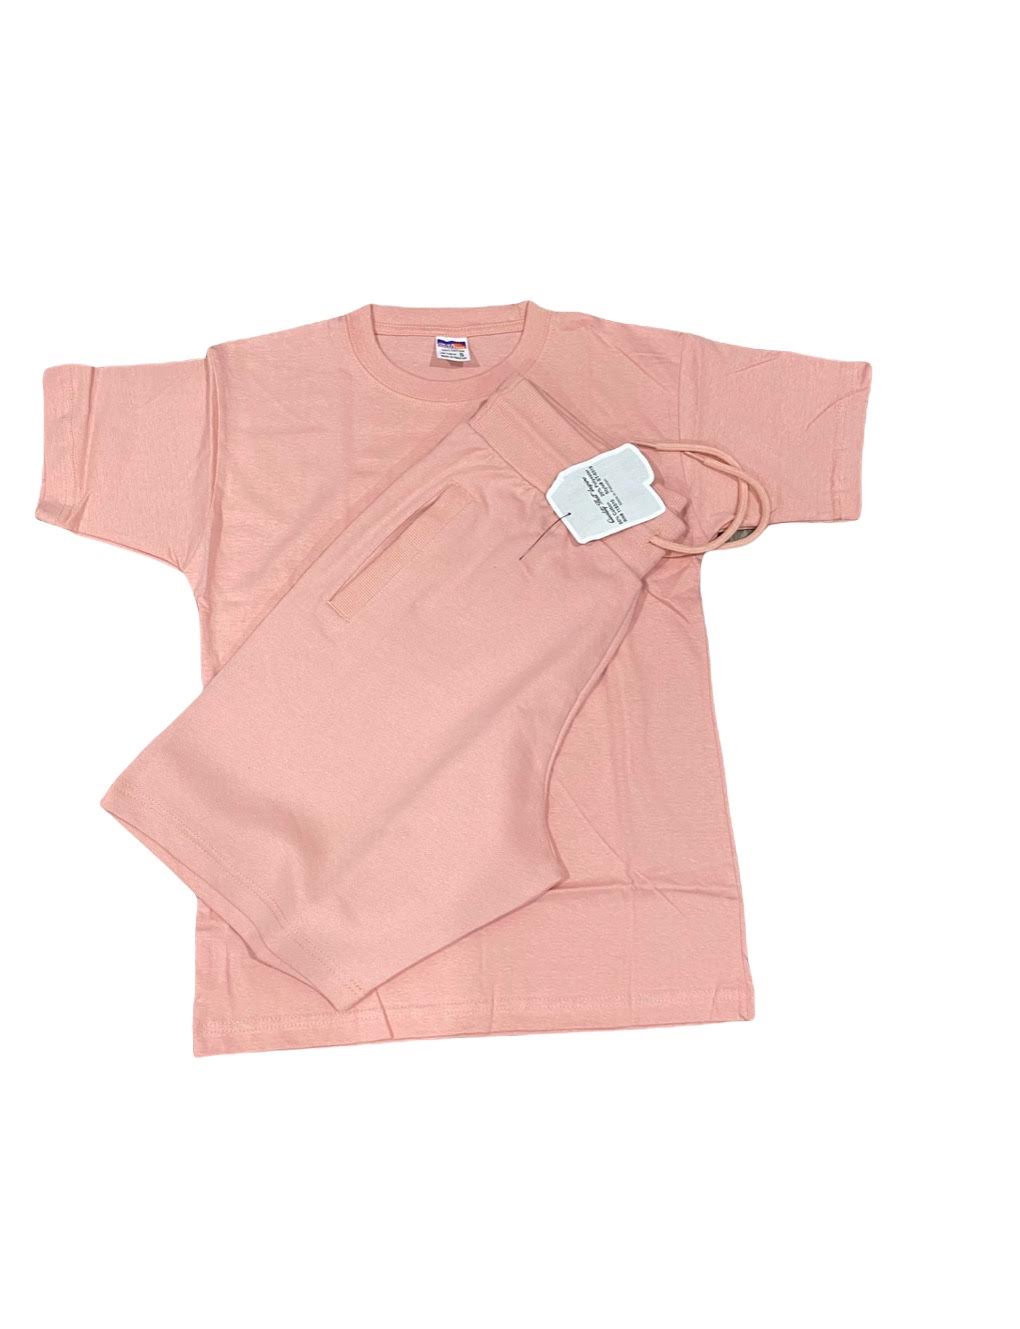 Peach t-shirt and short sets